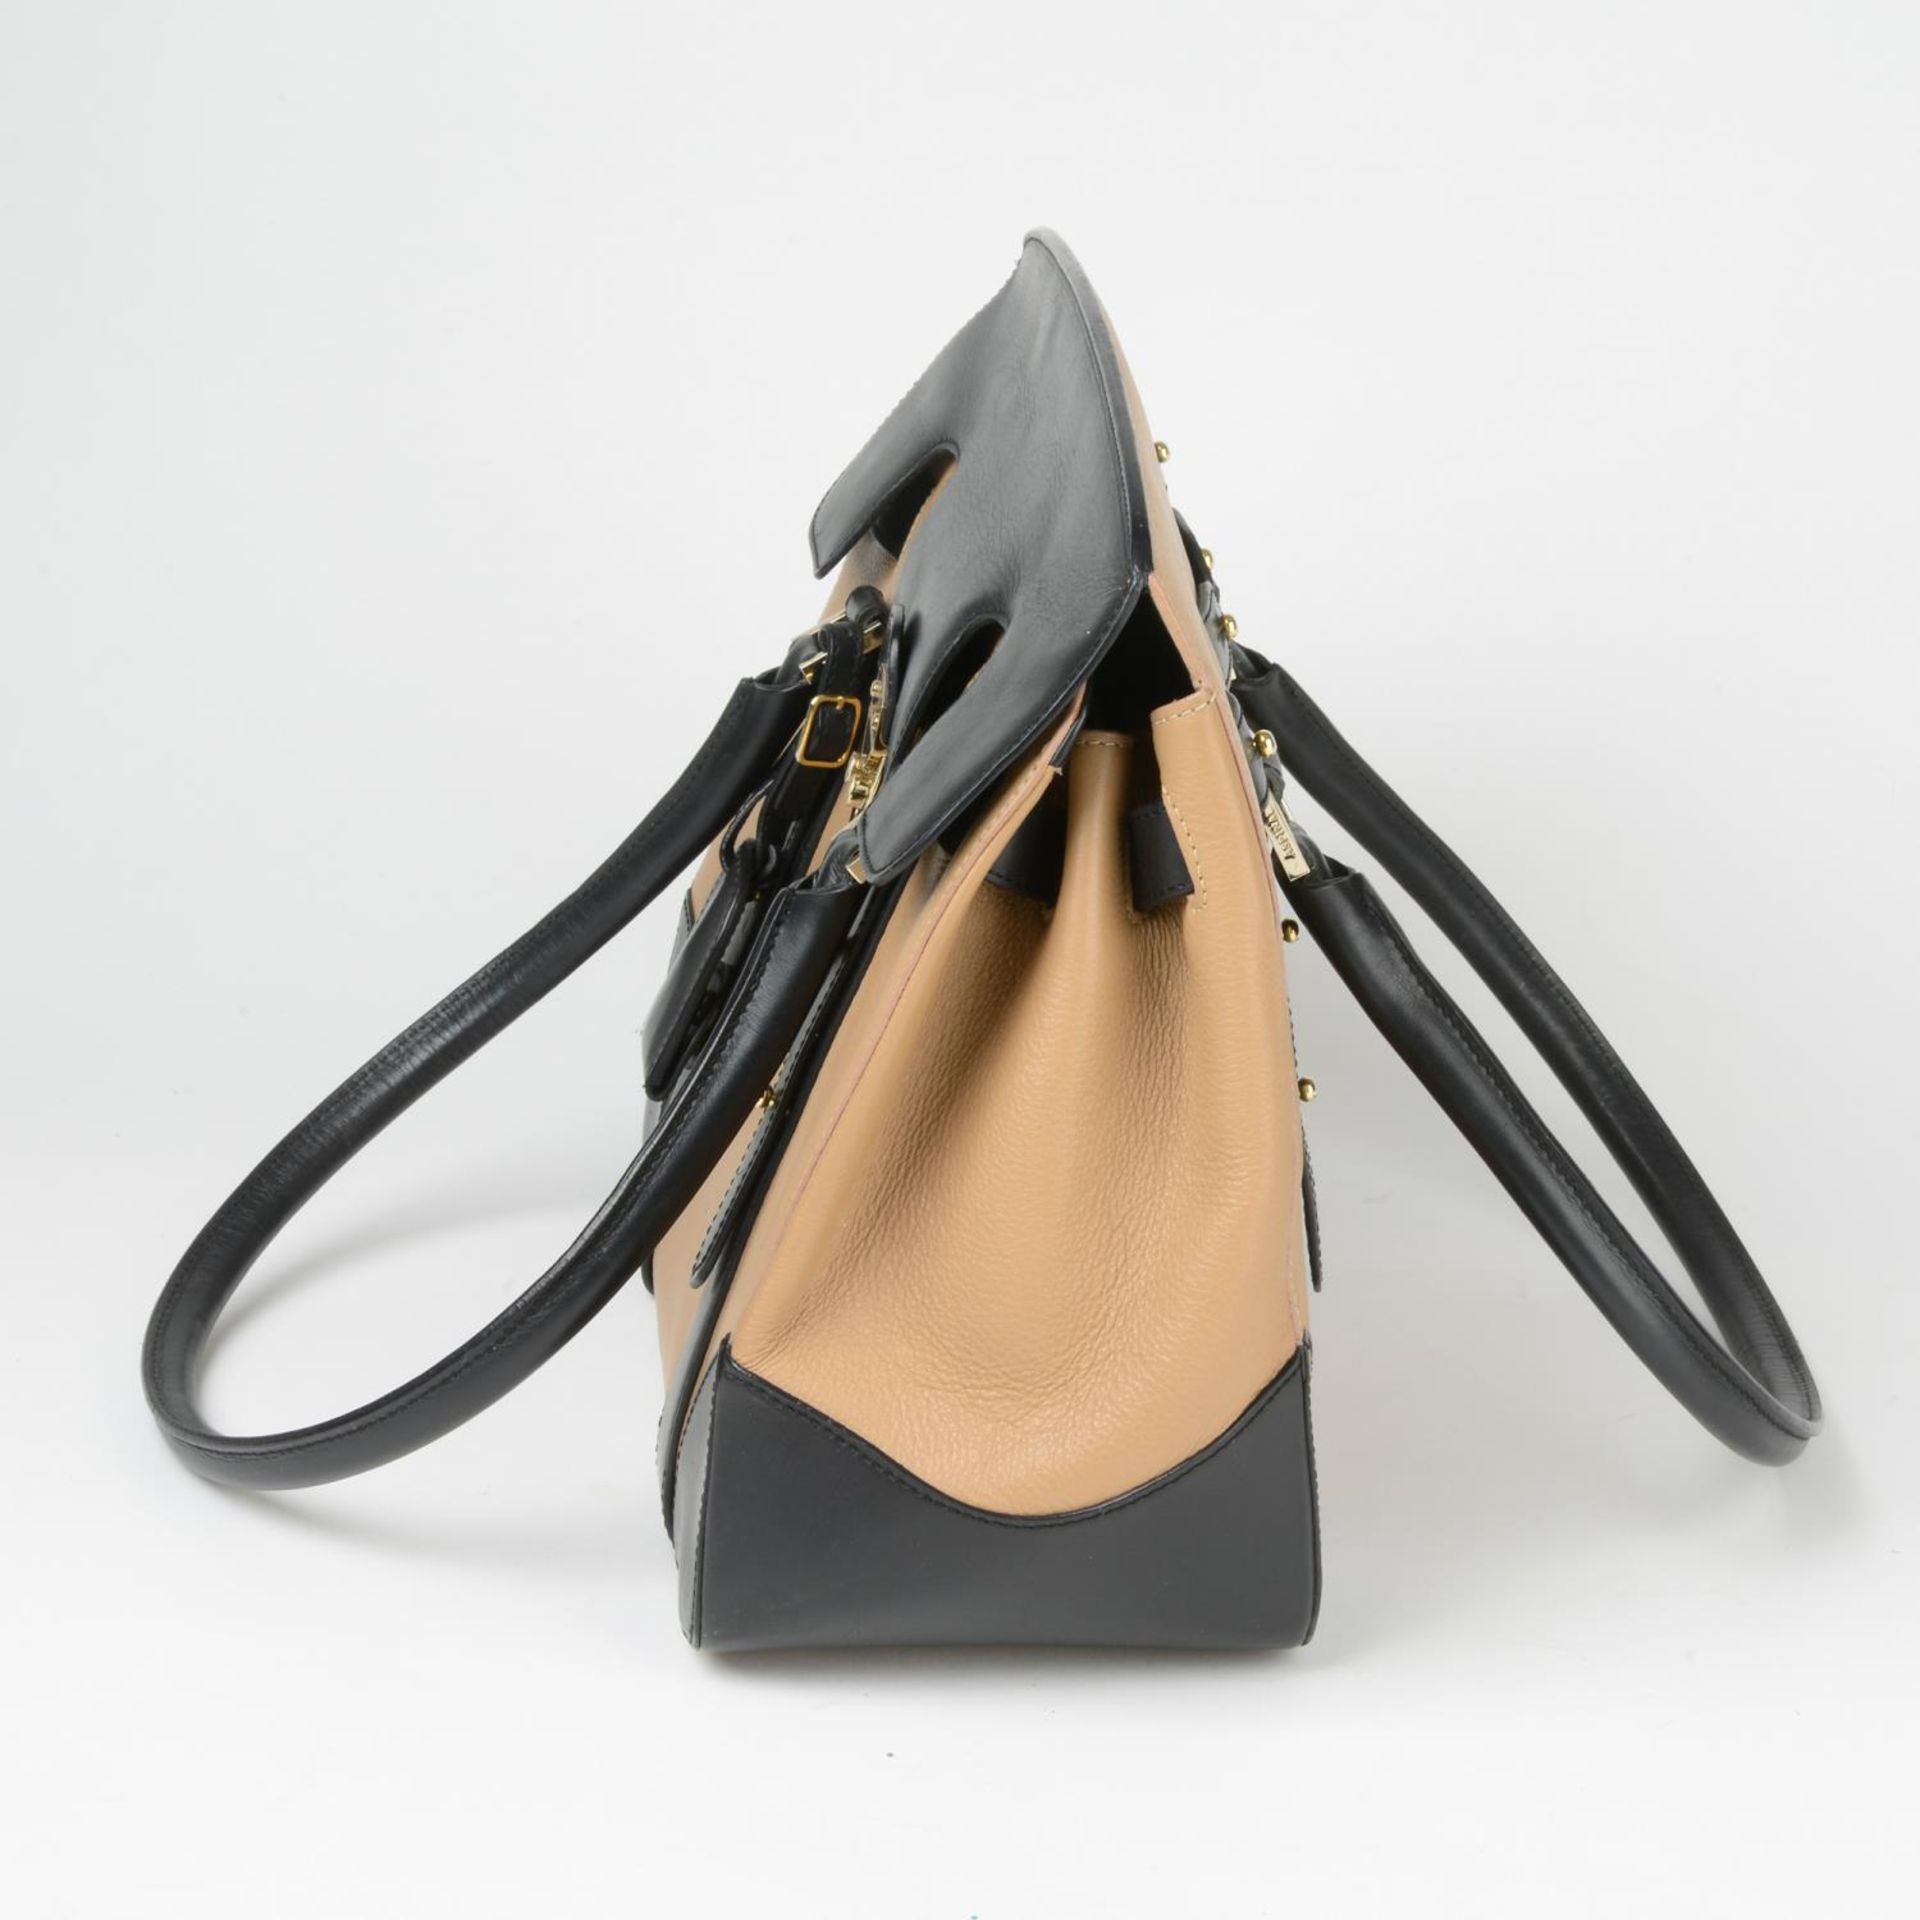 ASPINAL LONDON - a Berkeley leather handbag. - Bild 4 aus 5